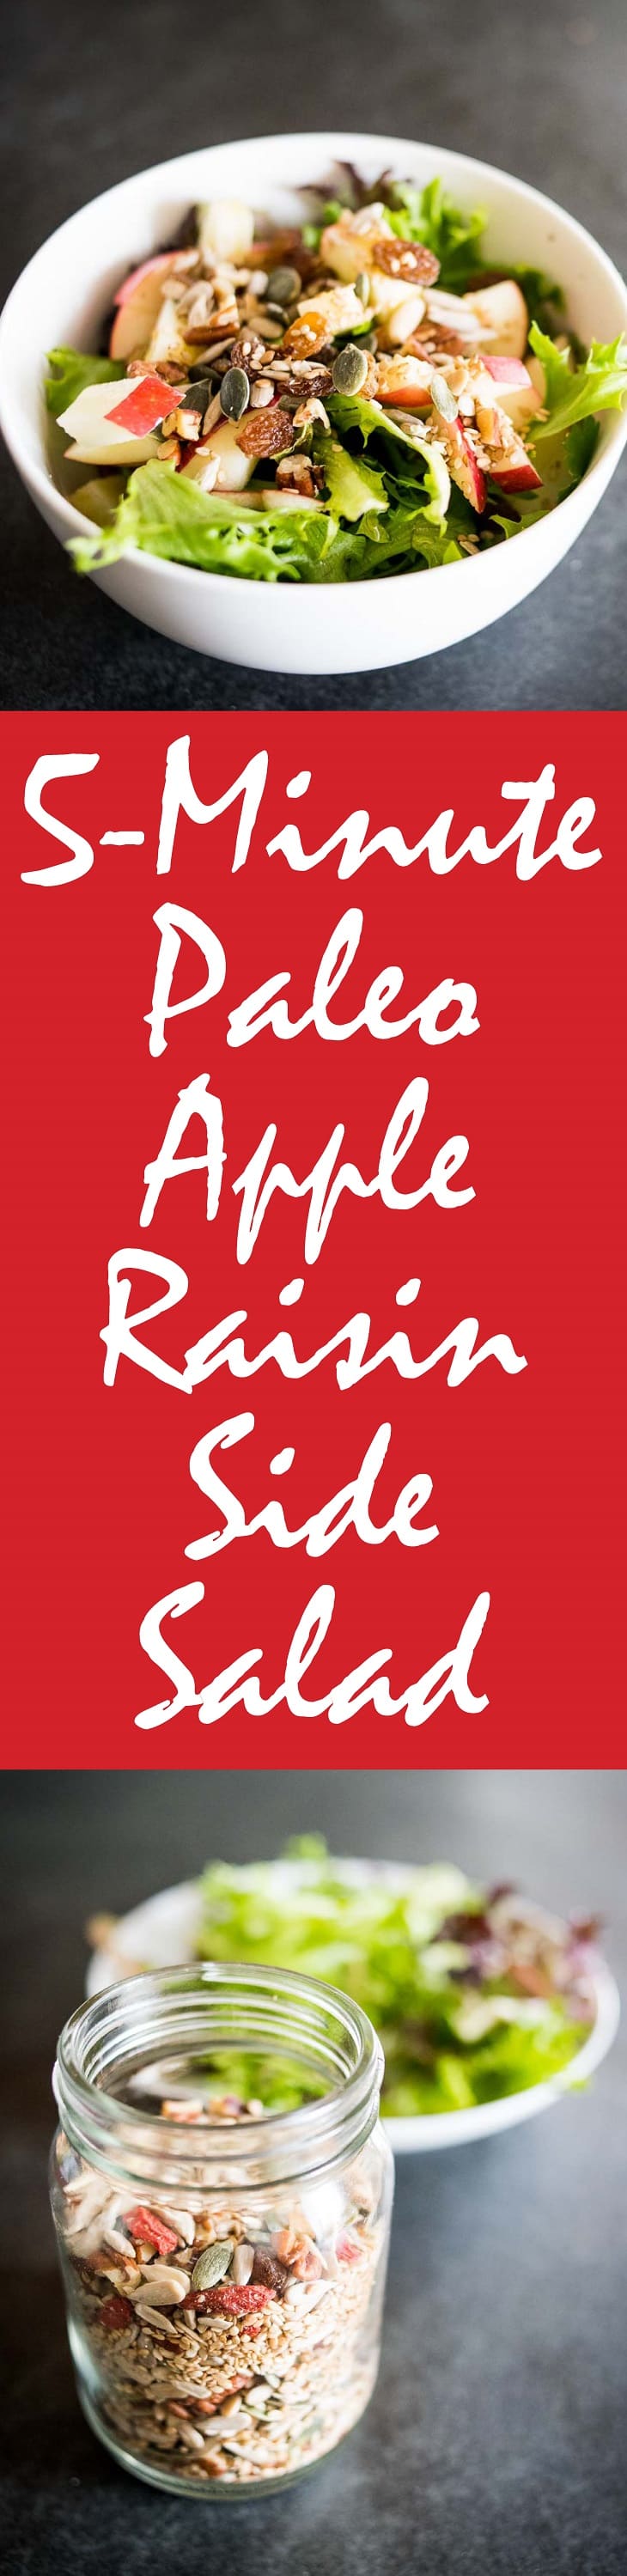 5-Minute Paleo Apple Raisin Side Salad Recipe #paleo - http://paleoflourish.com/fast-paleo-apple-raisin-side-salad-recipe